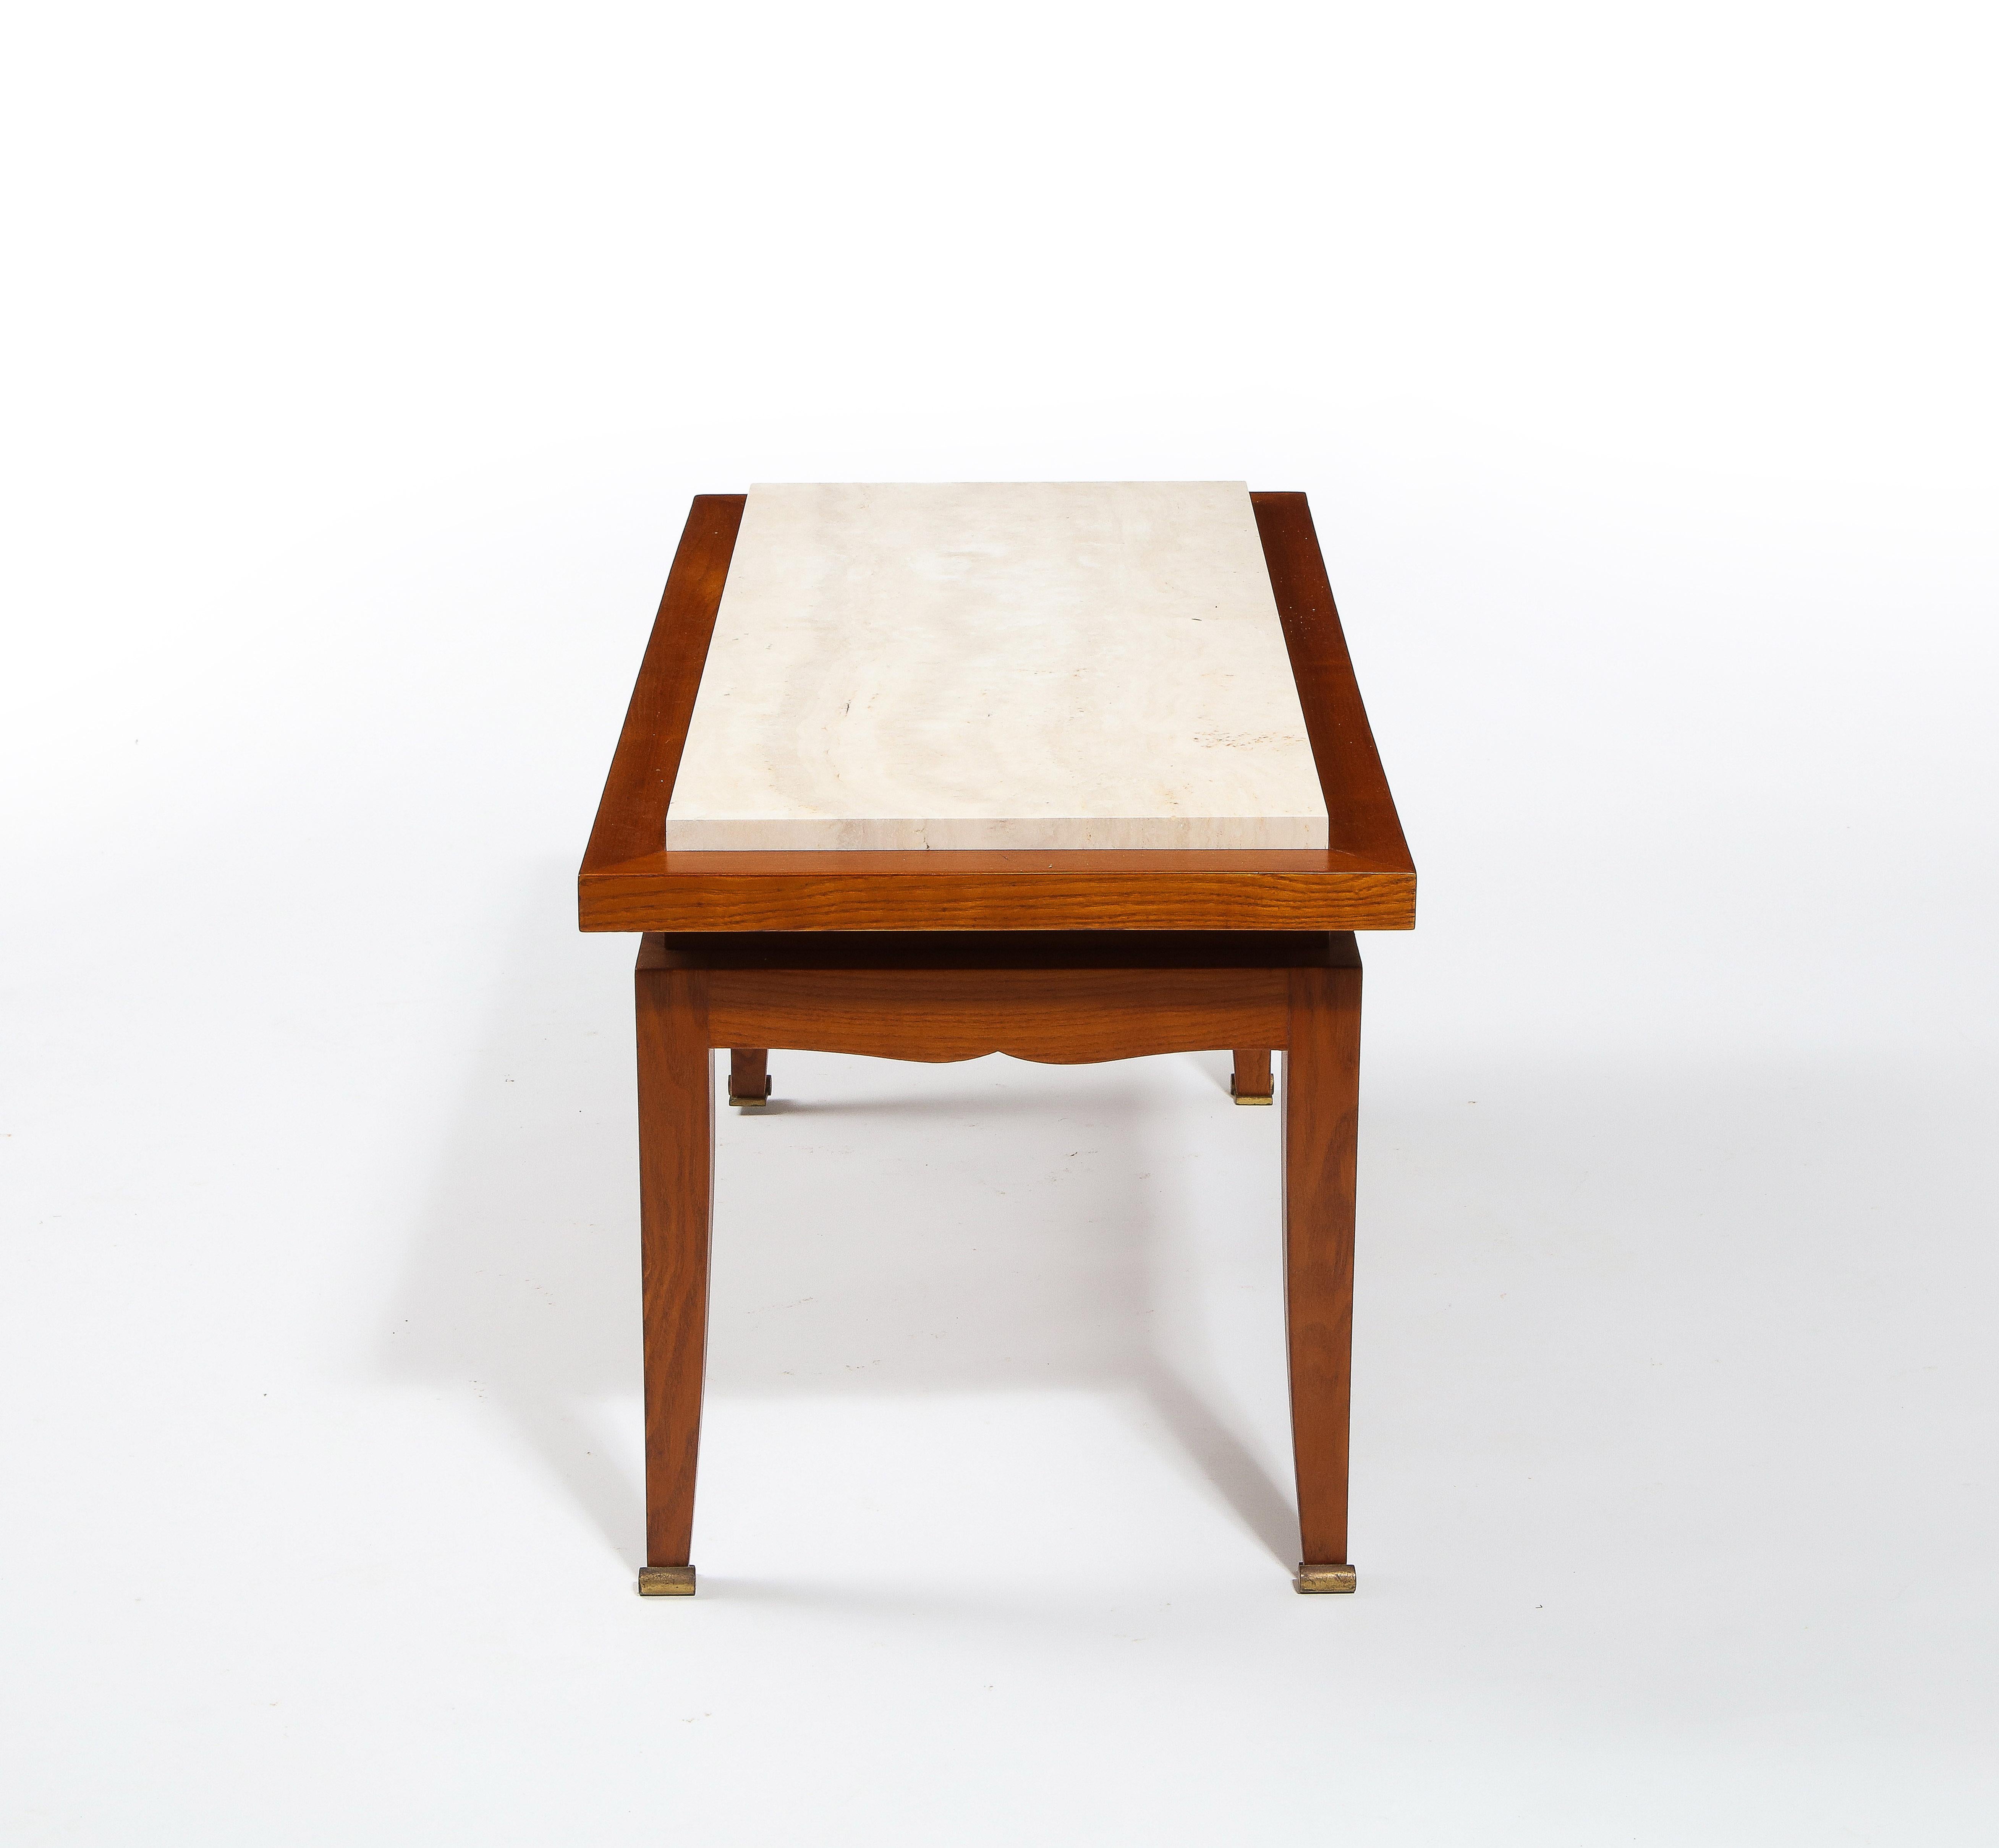 20th Century Jansen Oak & Travertine Art Deco Style Coffee Table, France 1940's For Sale